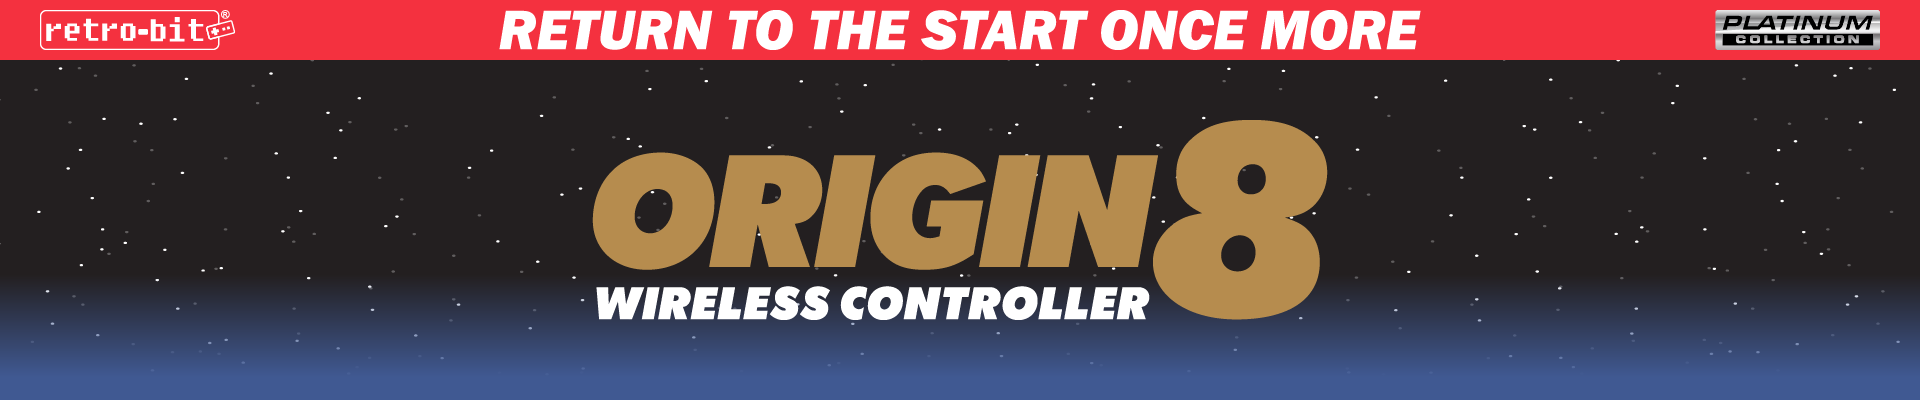 Origin8 - Return to the Start